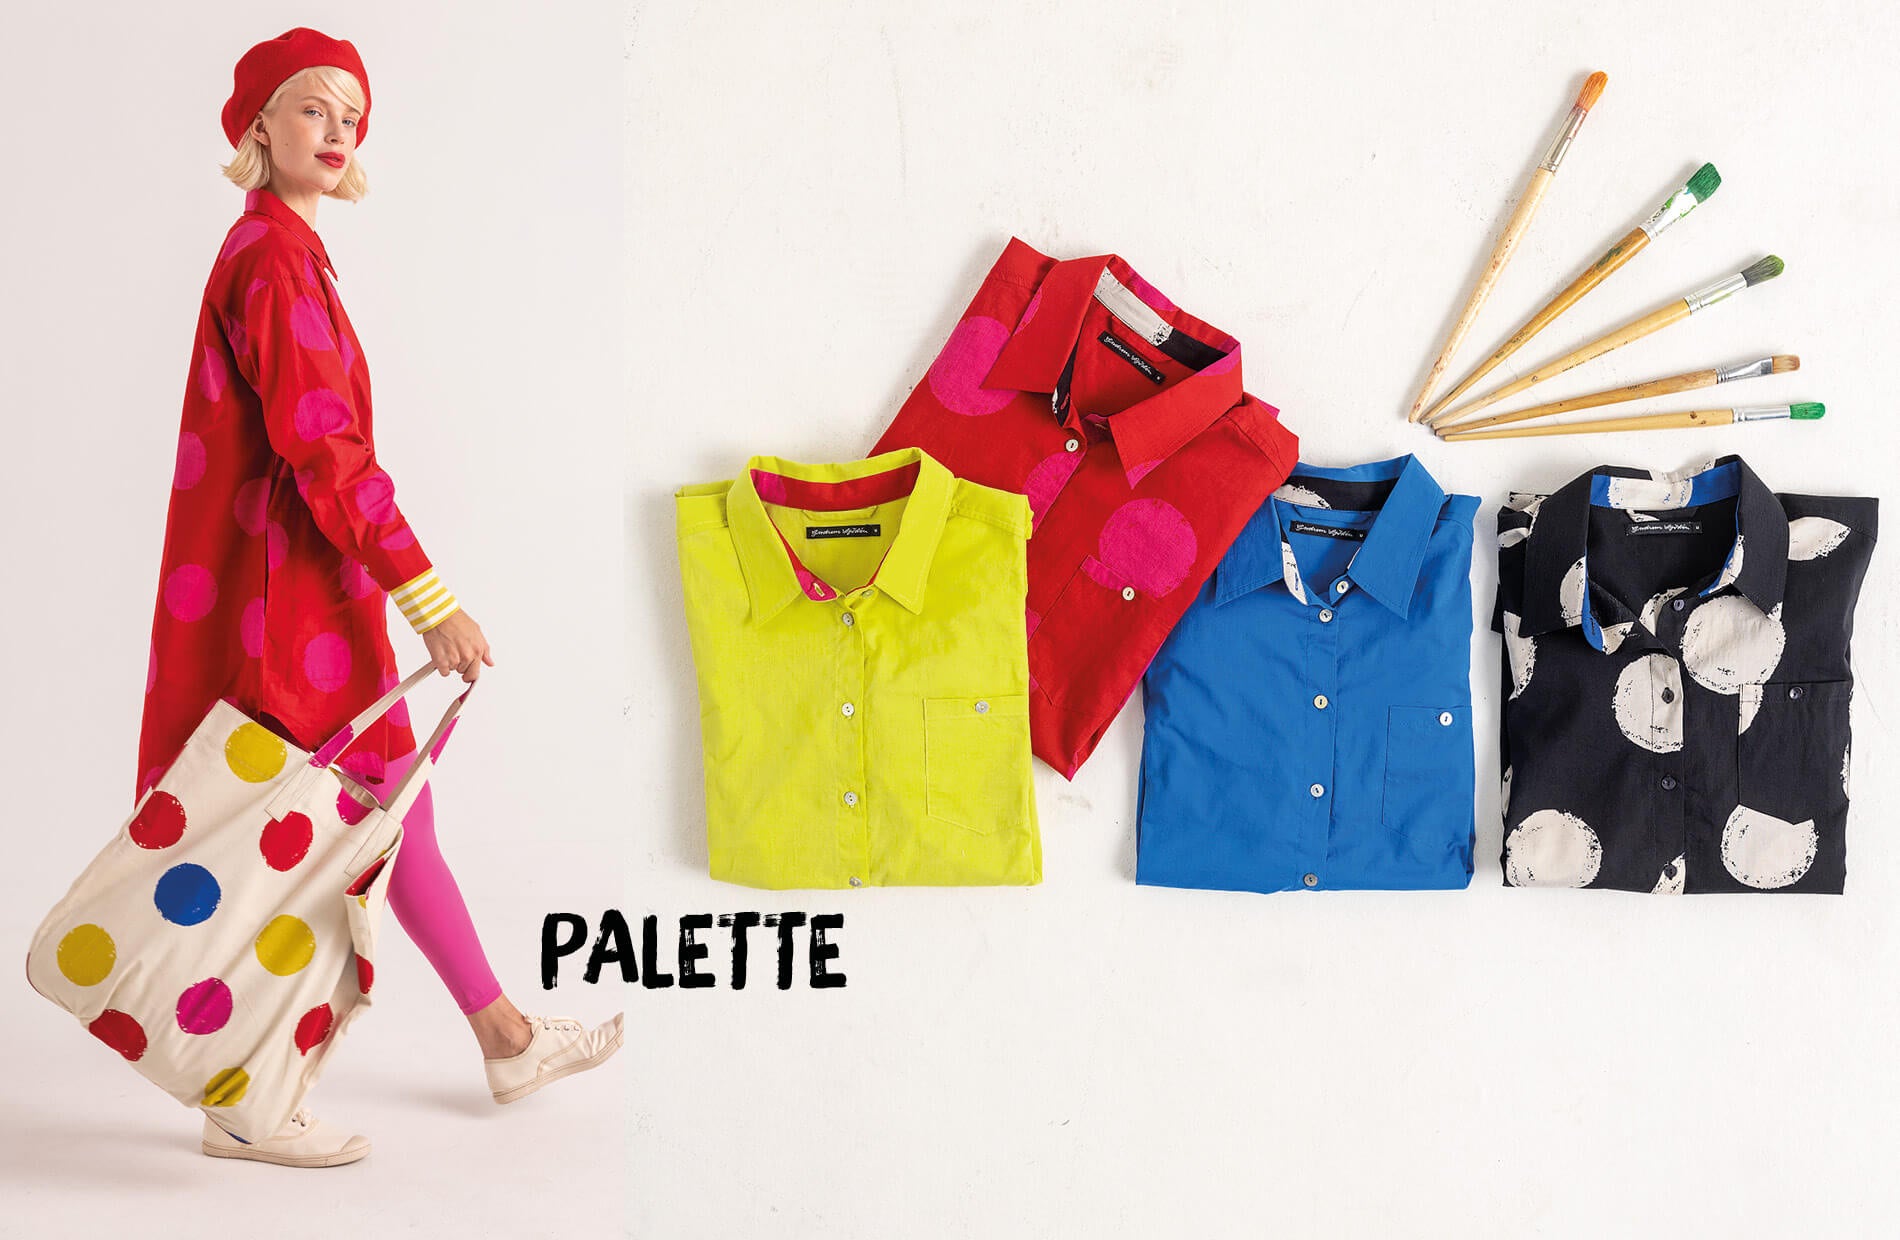 Palette” organic cotton shirt dress